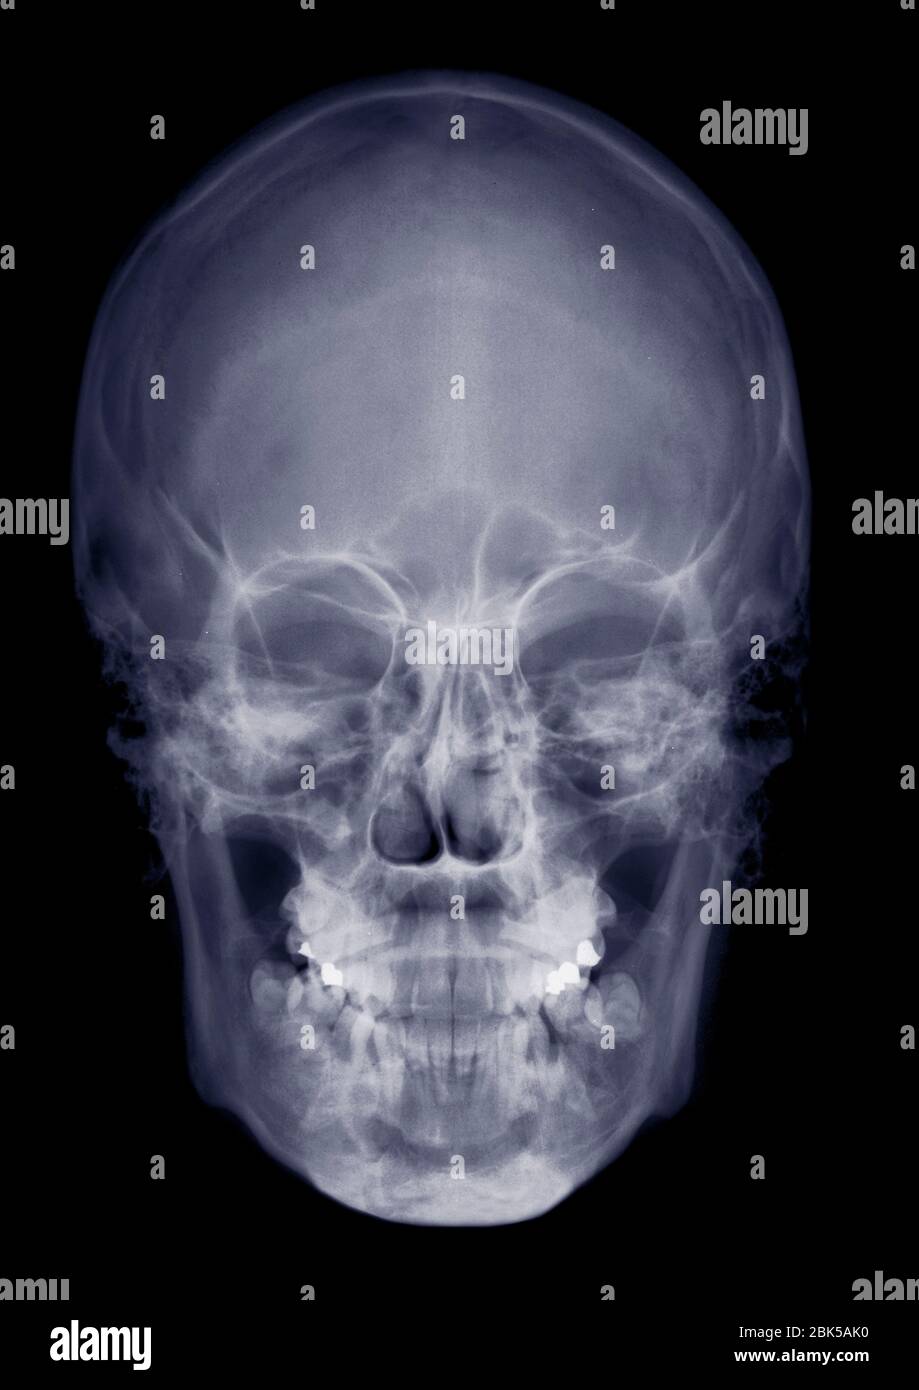 Human skull from front, X-ray. Stock Photo